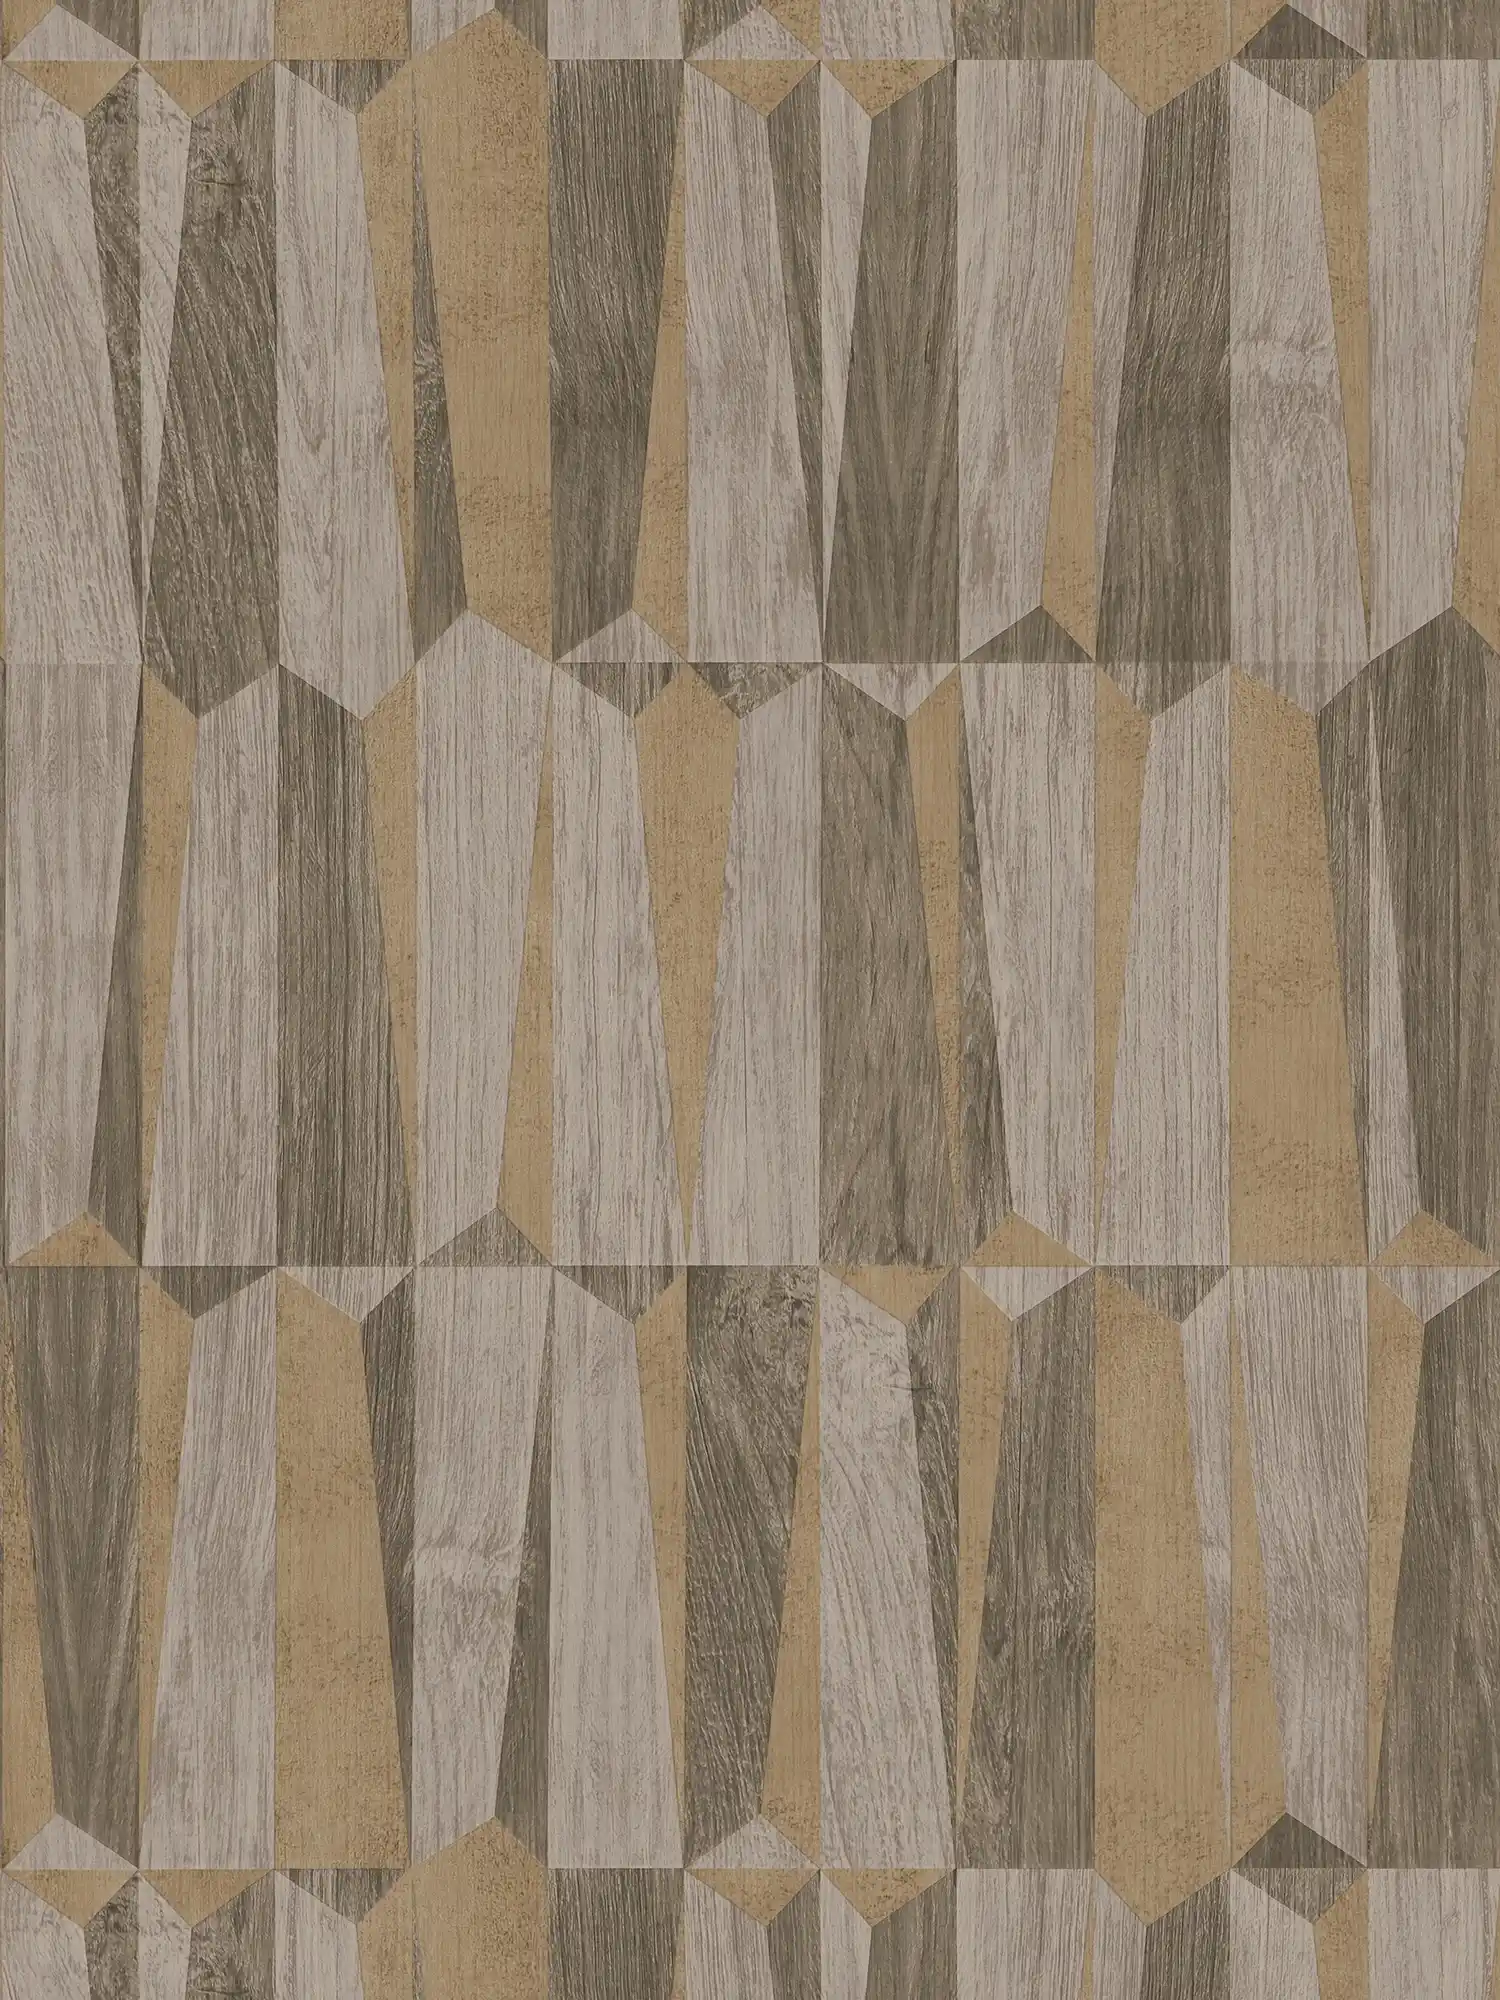 Ethno wallpaper with metallic & wood effect - brown, grey
